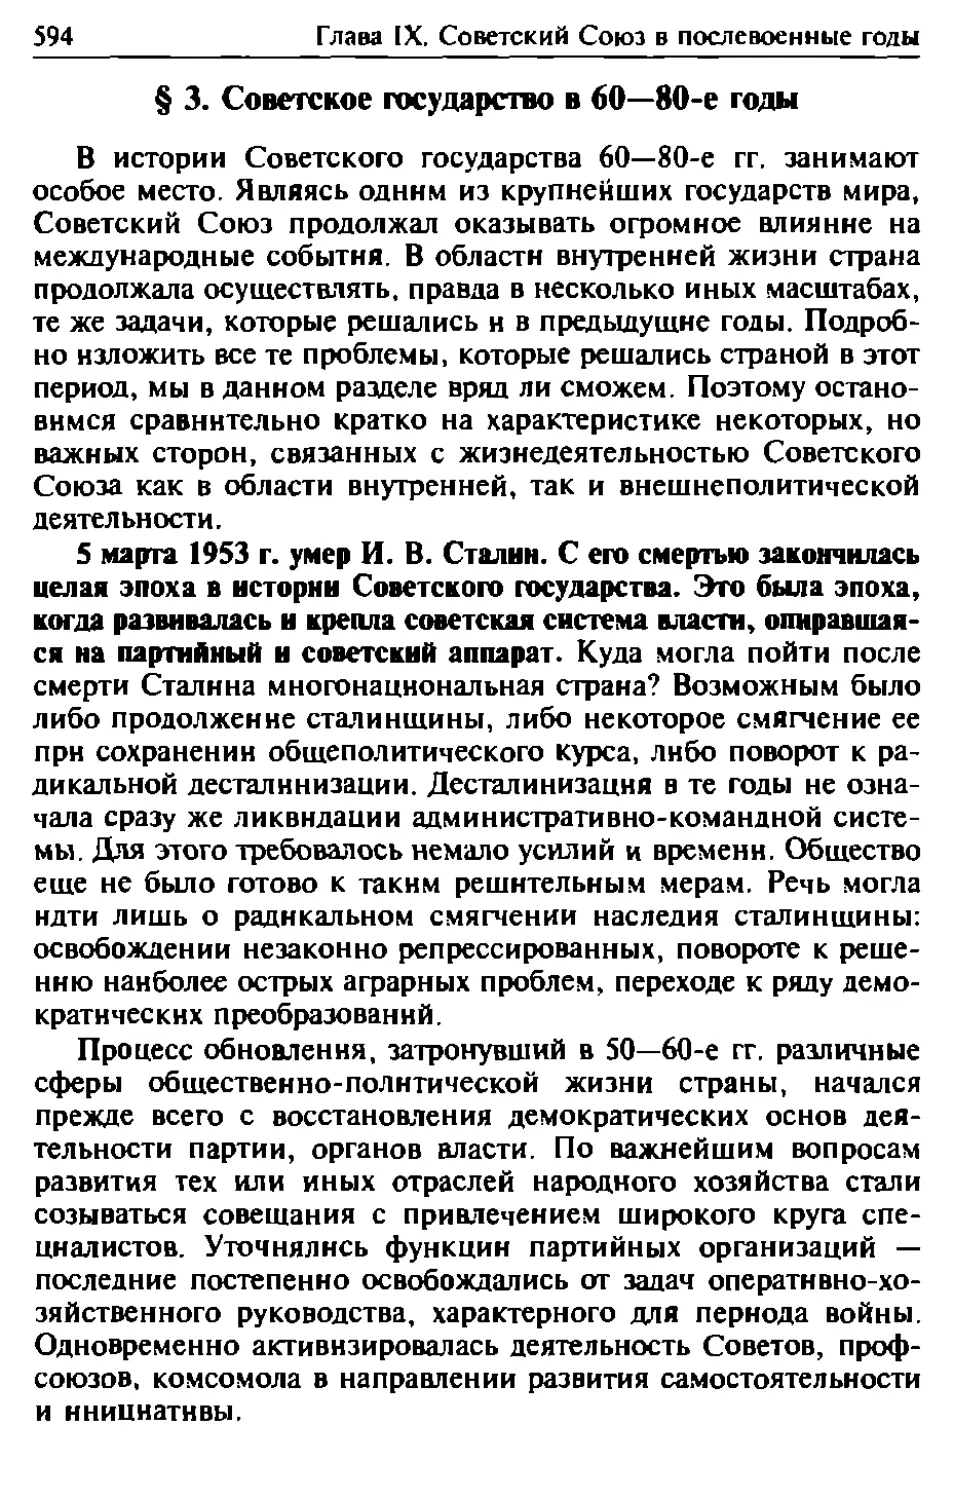 § 3. Советское государство в 60—80-е гг